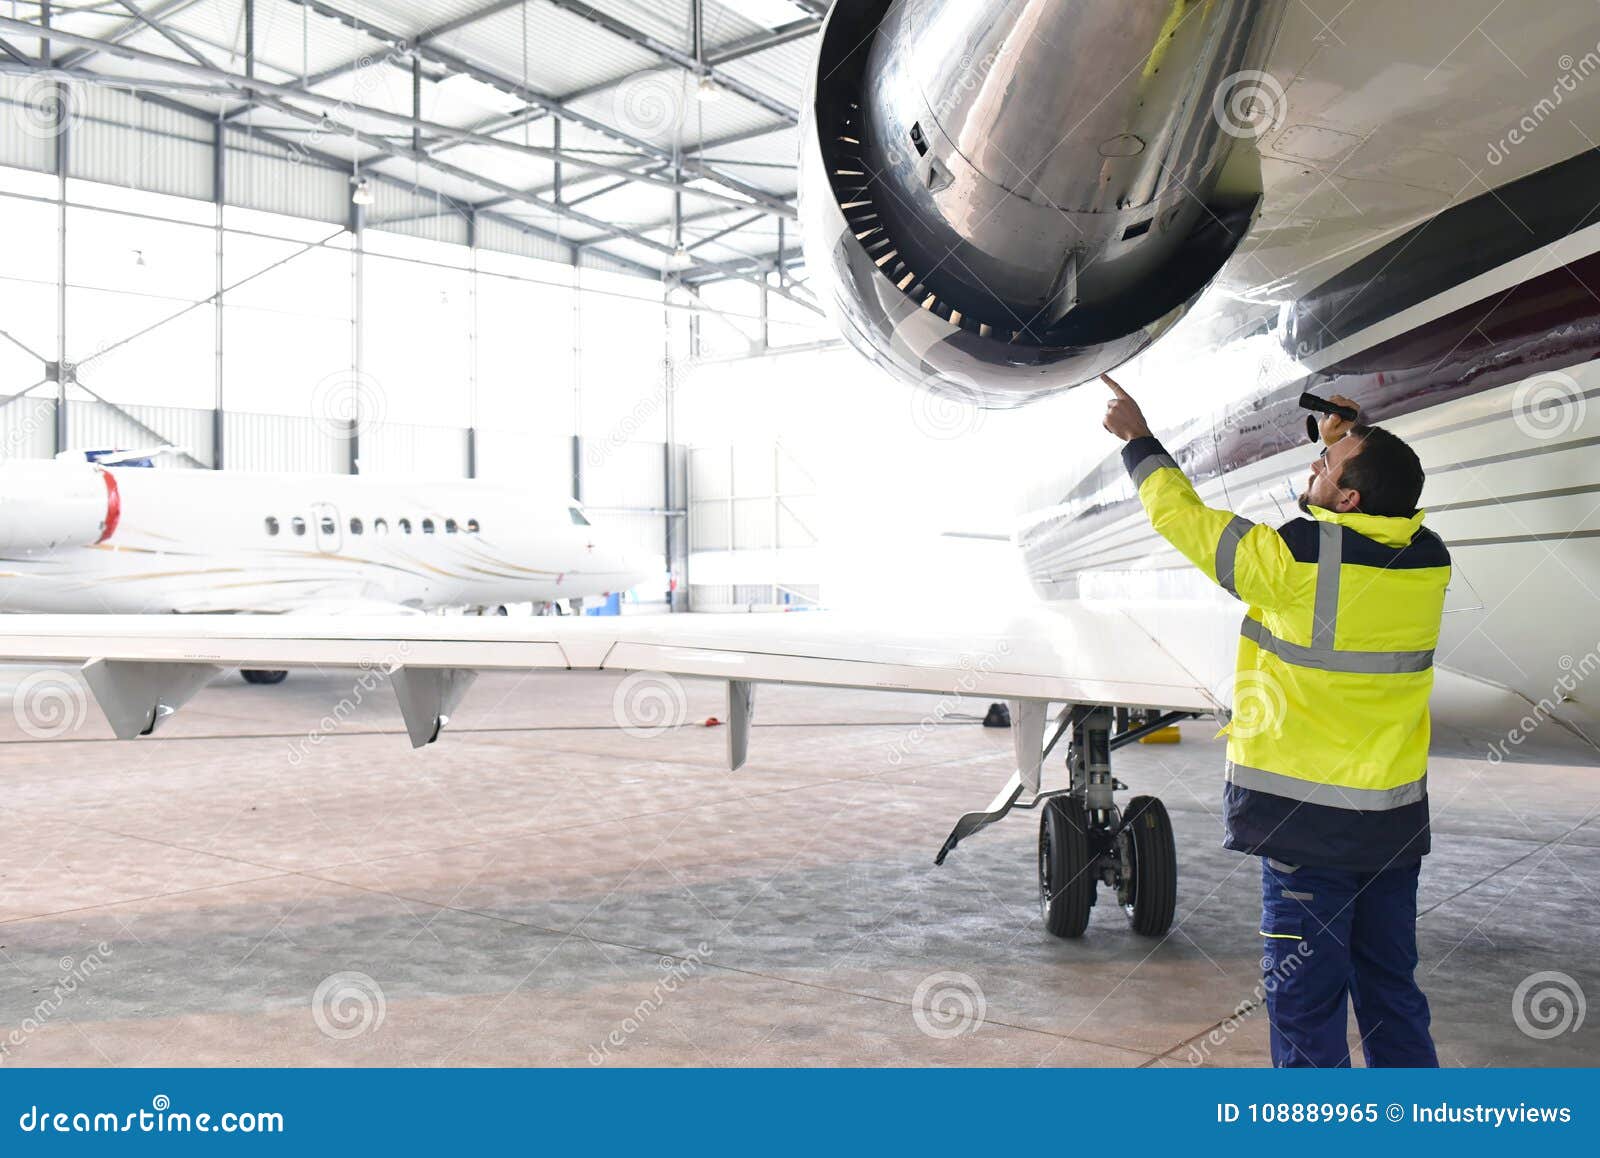 aircraft mechanic/ ground crew inspects and checks the turbine